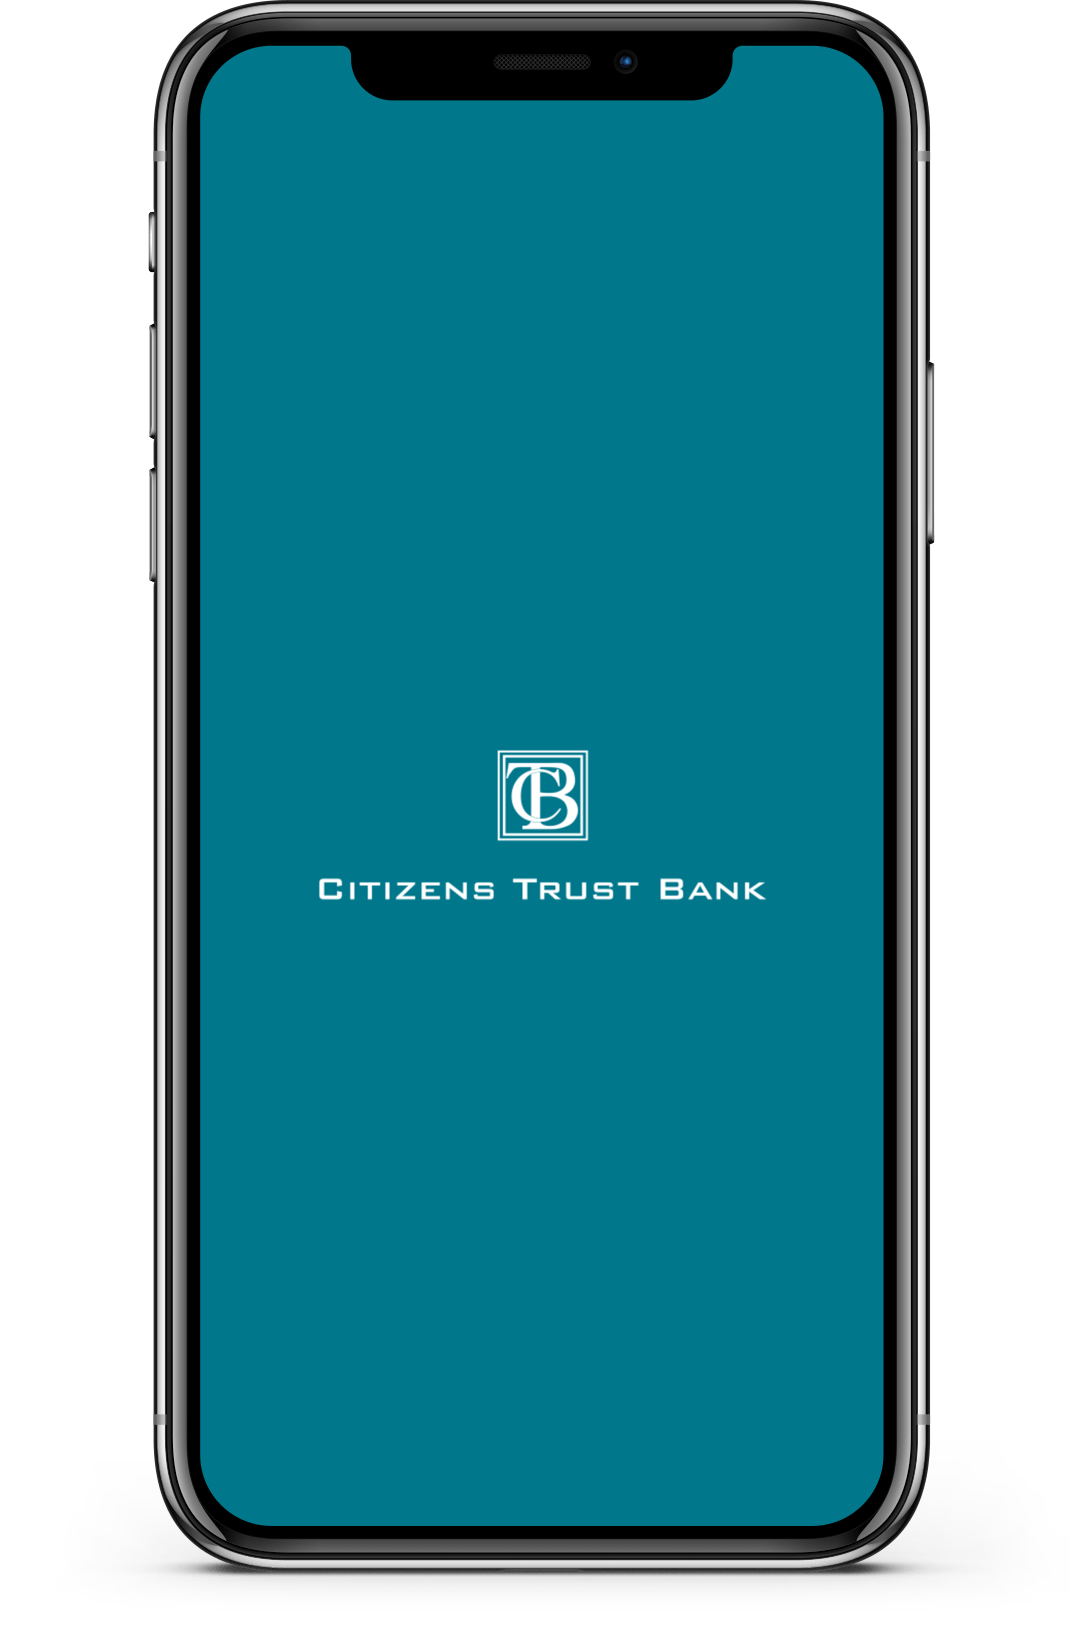 Online - Citizens Trust Bank